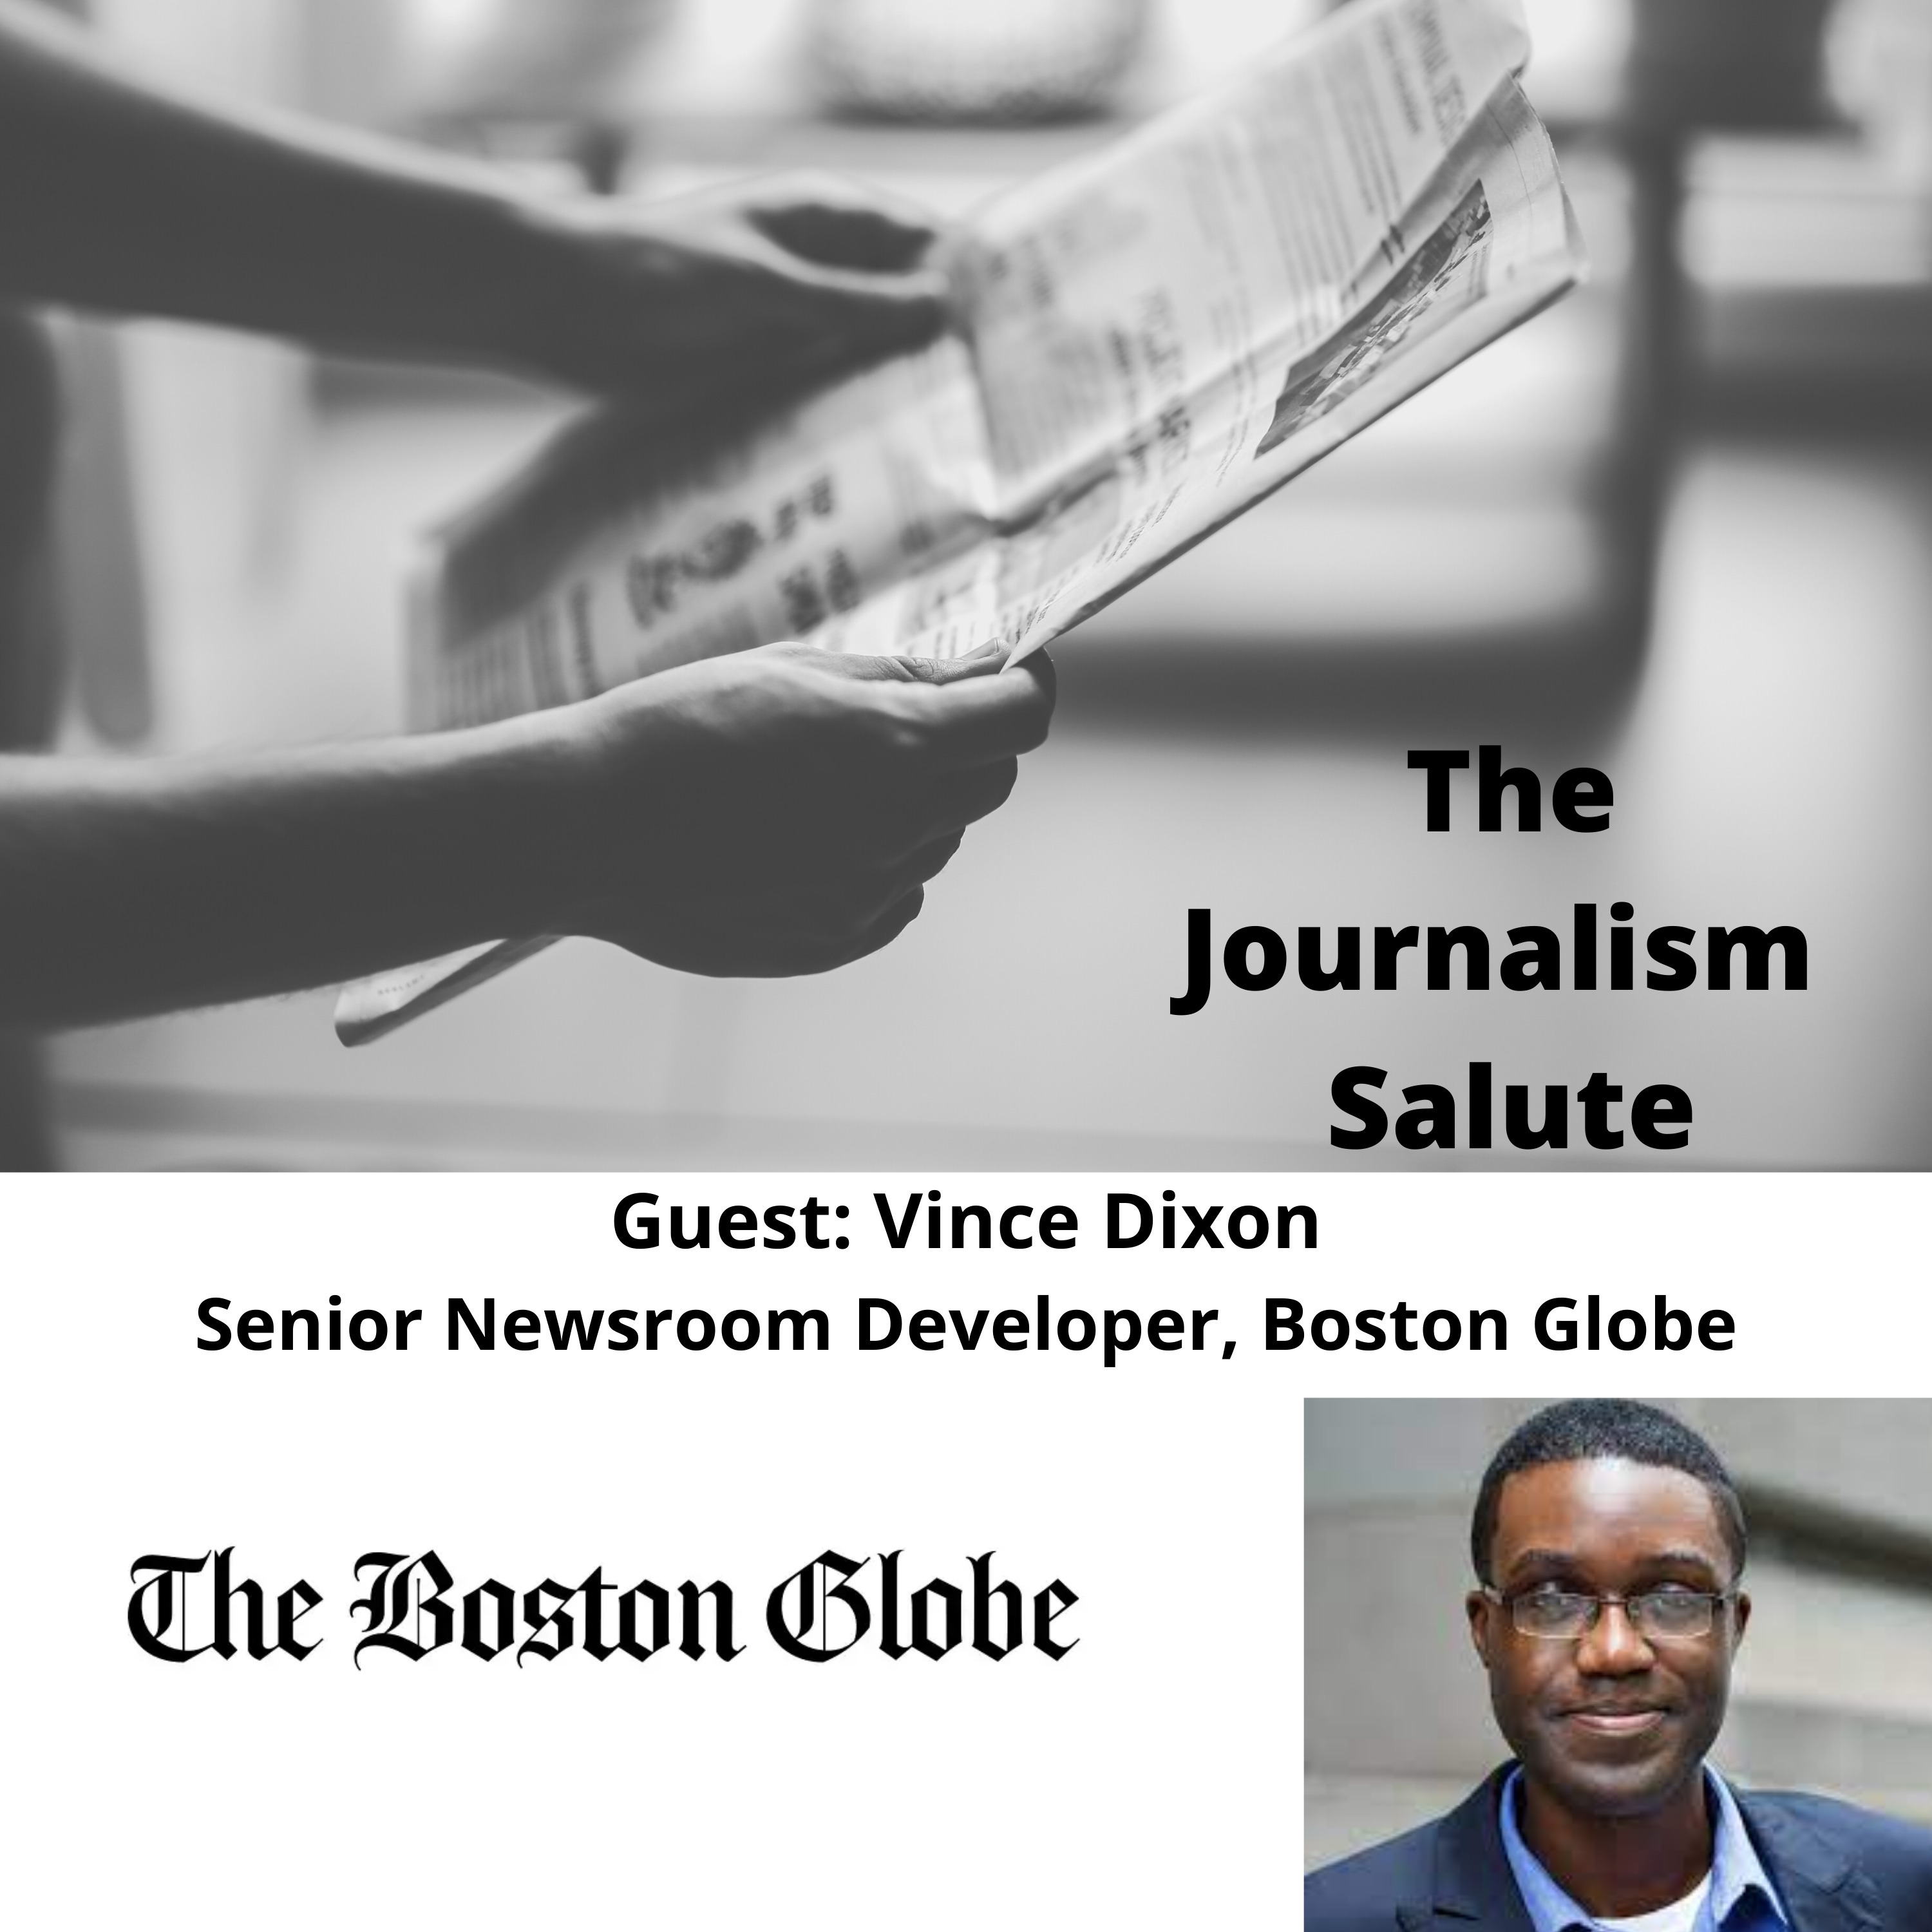 Boston Globe Senior Newsroom Developer Vince Dixon